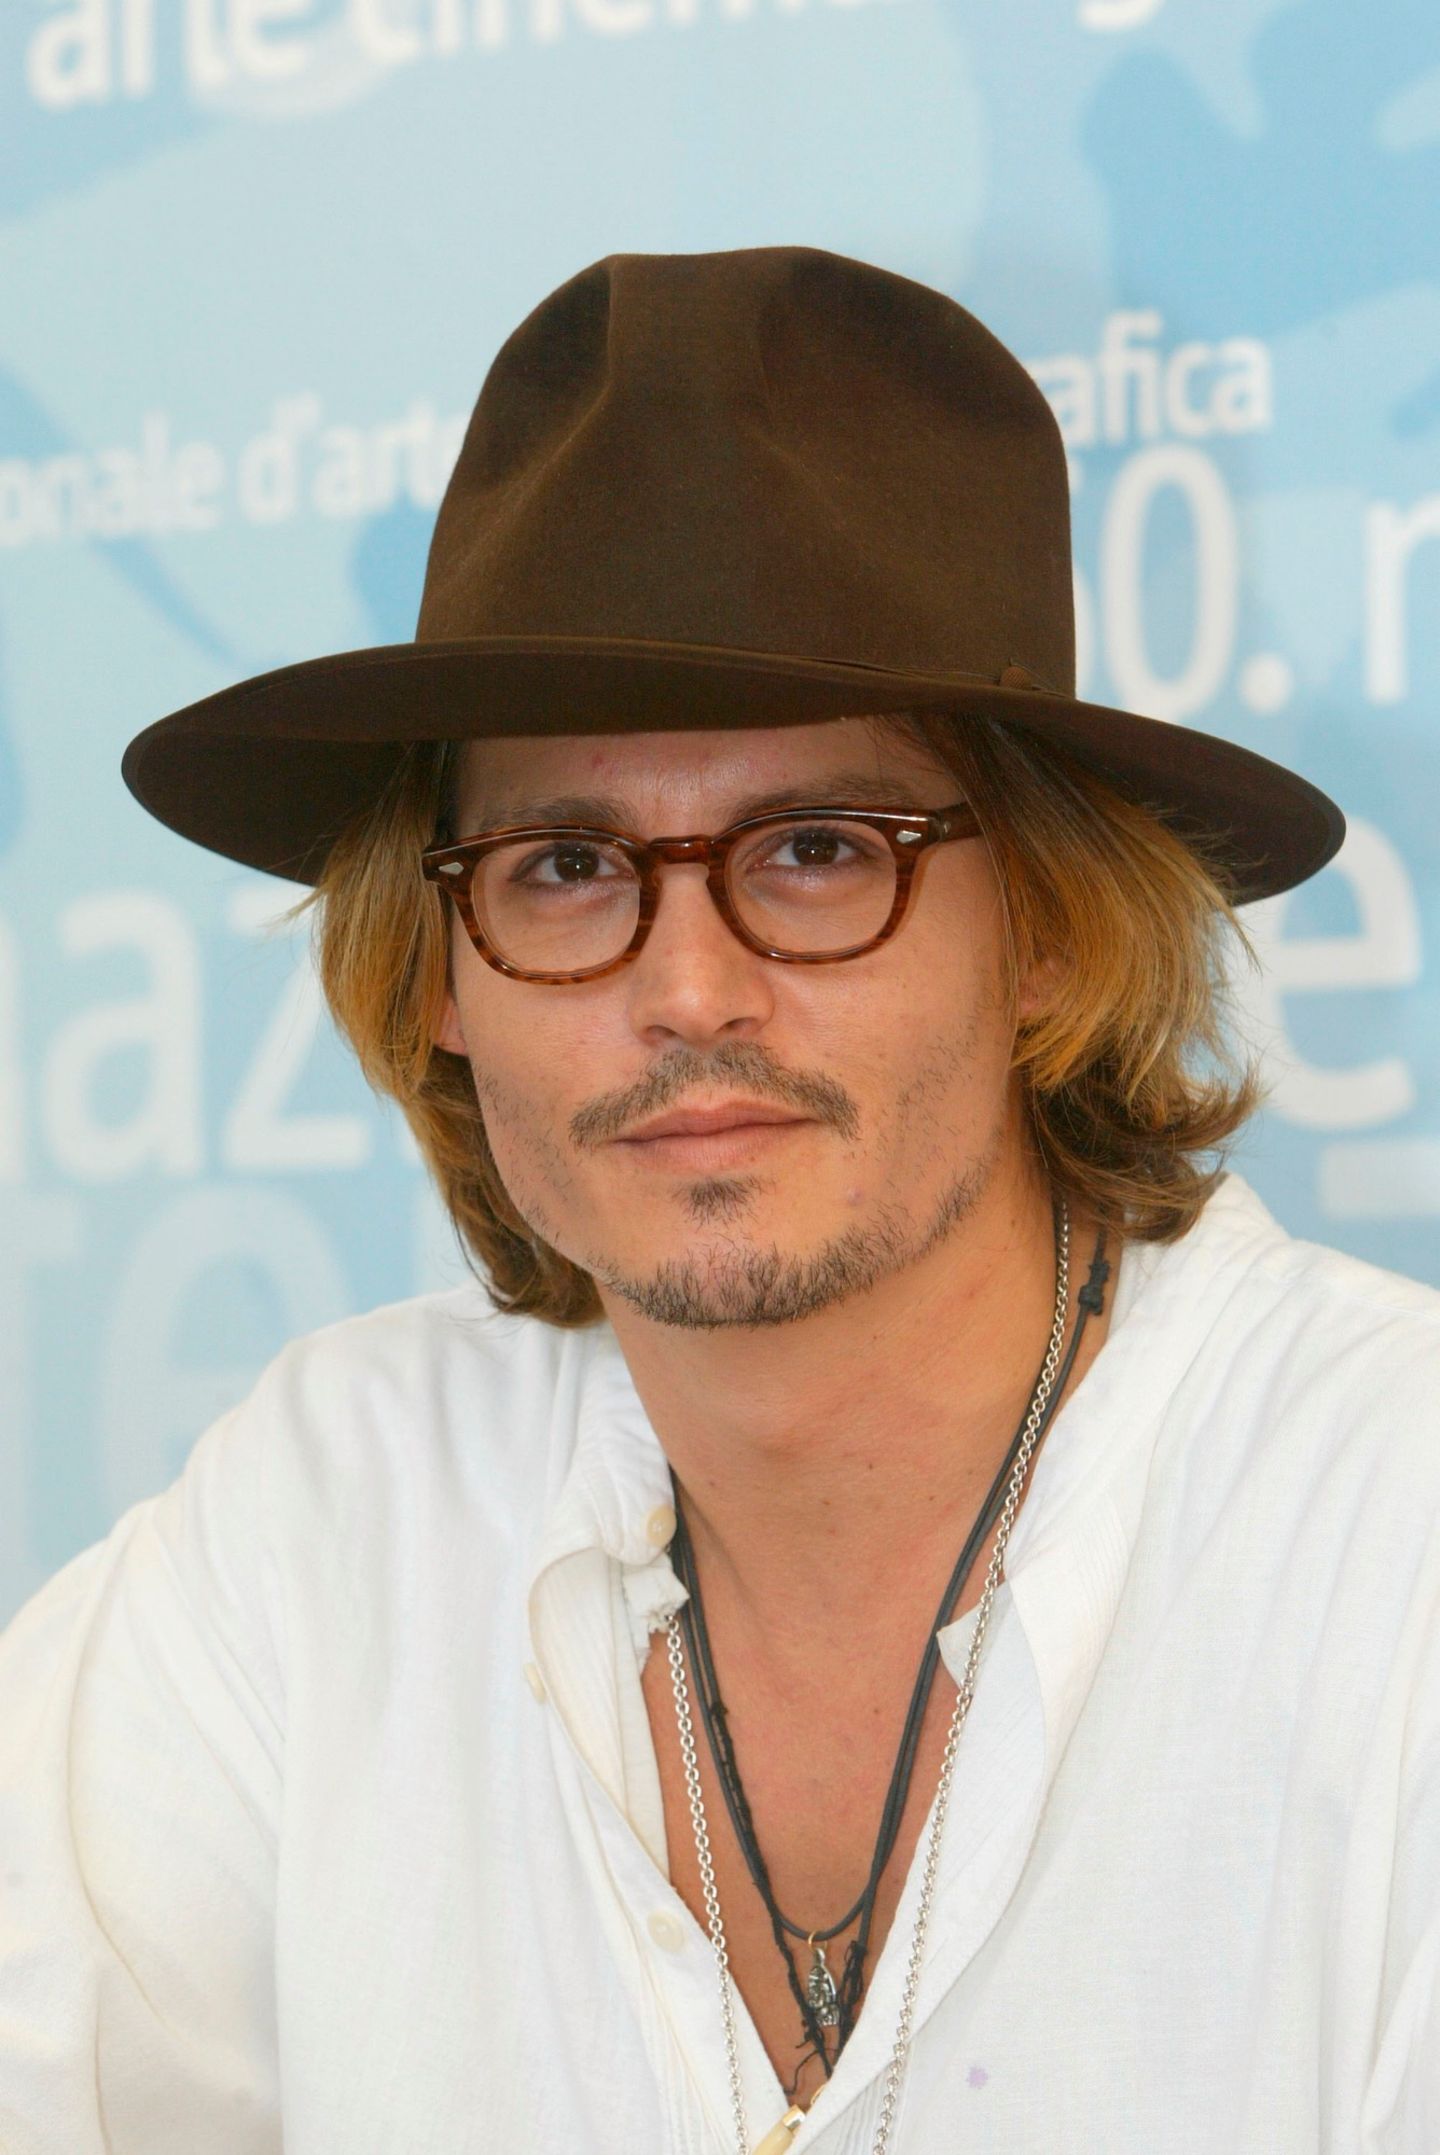 Sexiest Man Alive 2003 - Johnny Depp